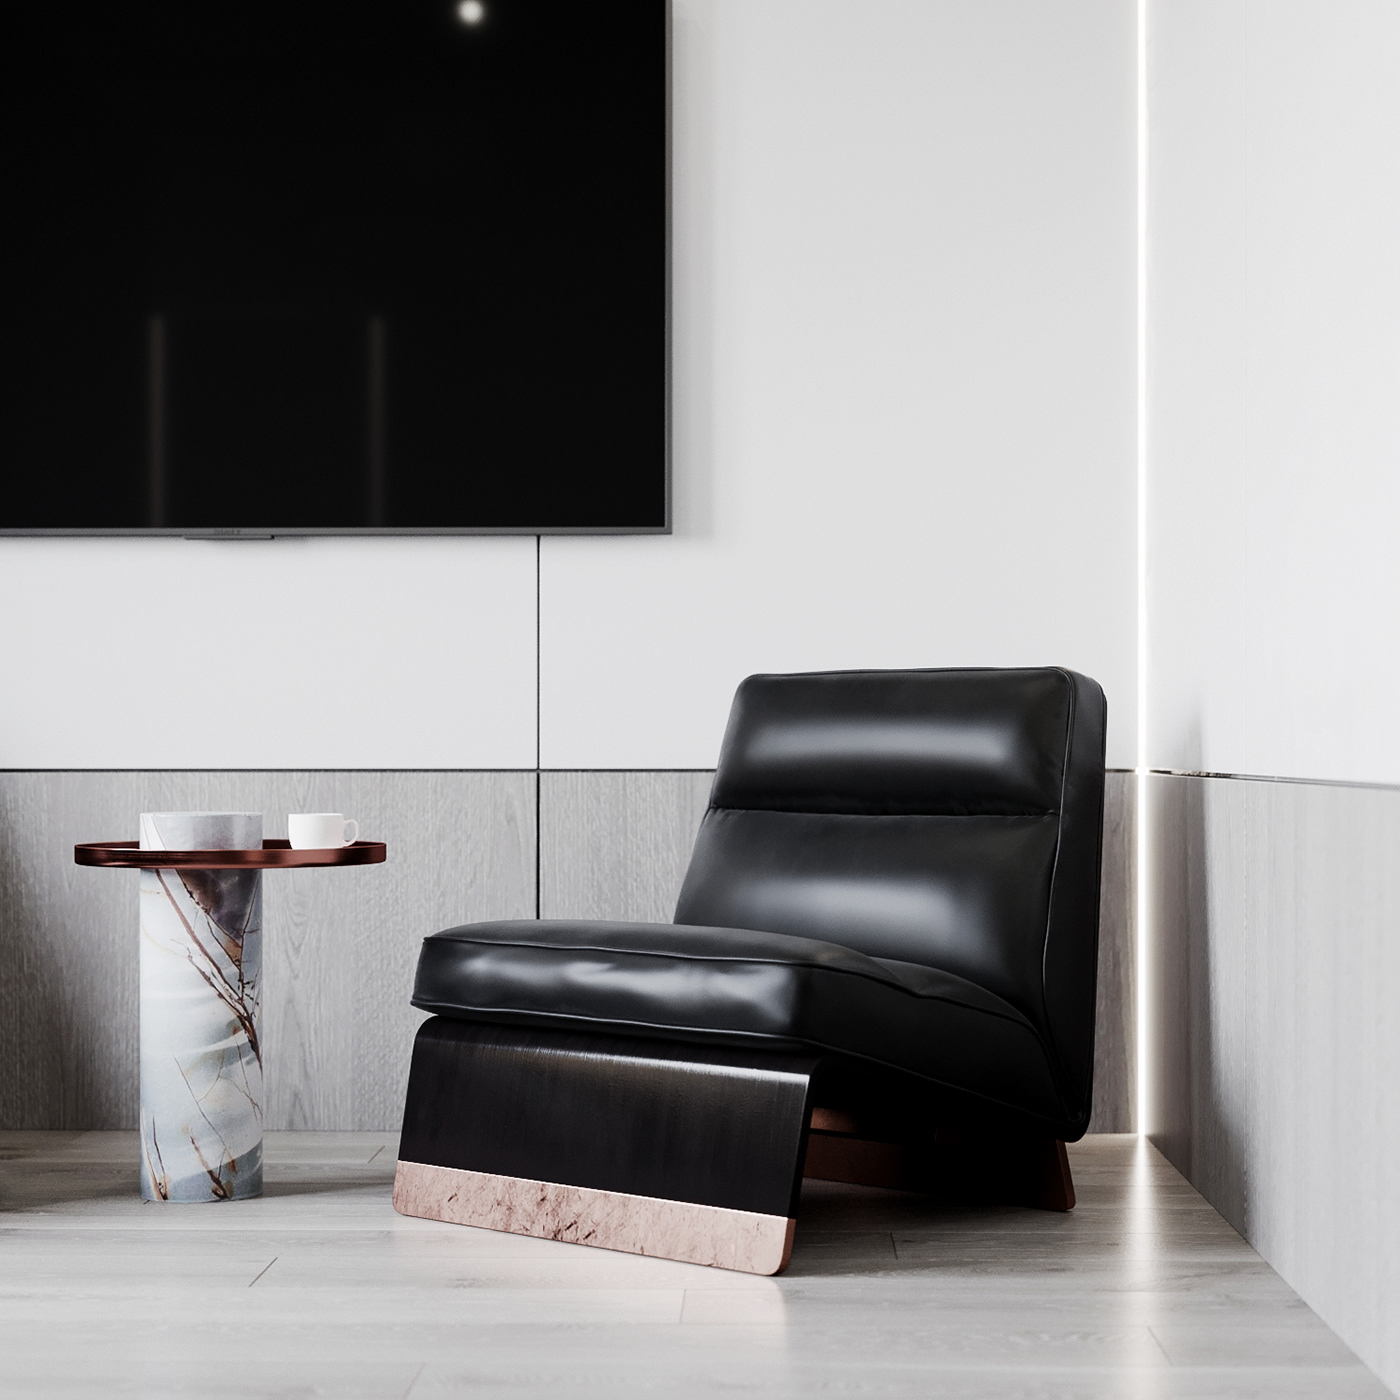 Office Office interior corona render  bathroom 3ds max design interior visualisation rendering Minimalism modern interior